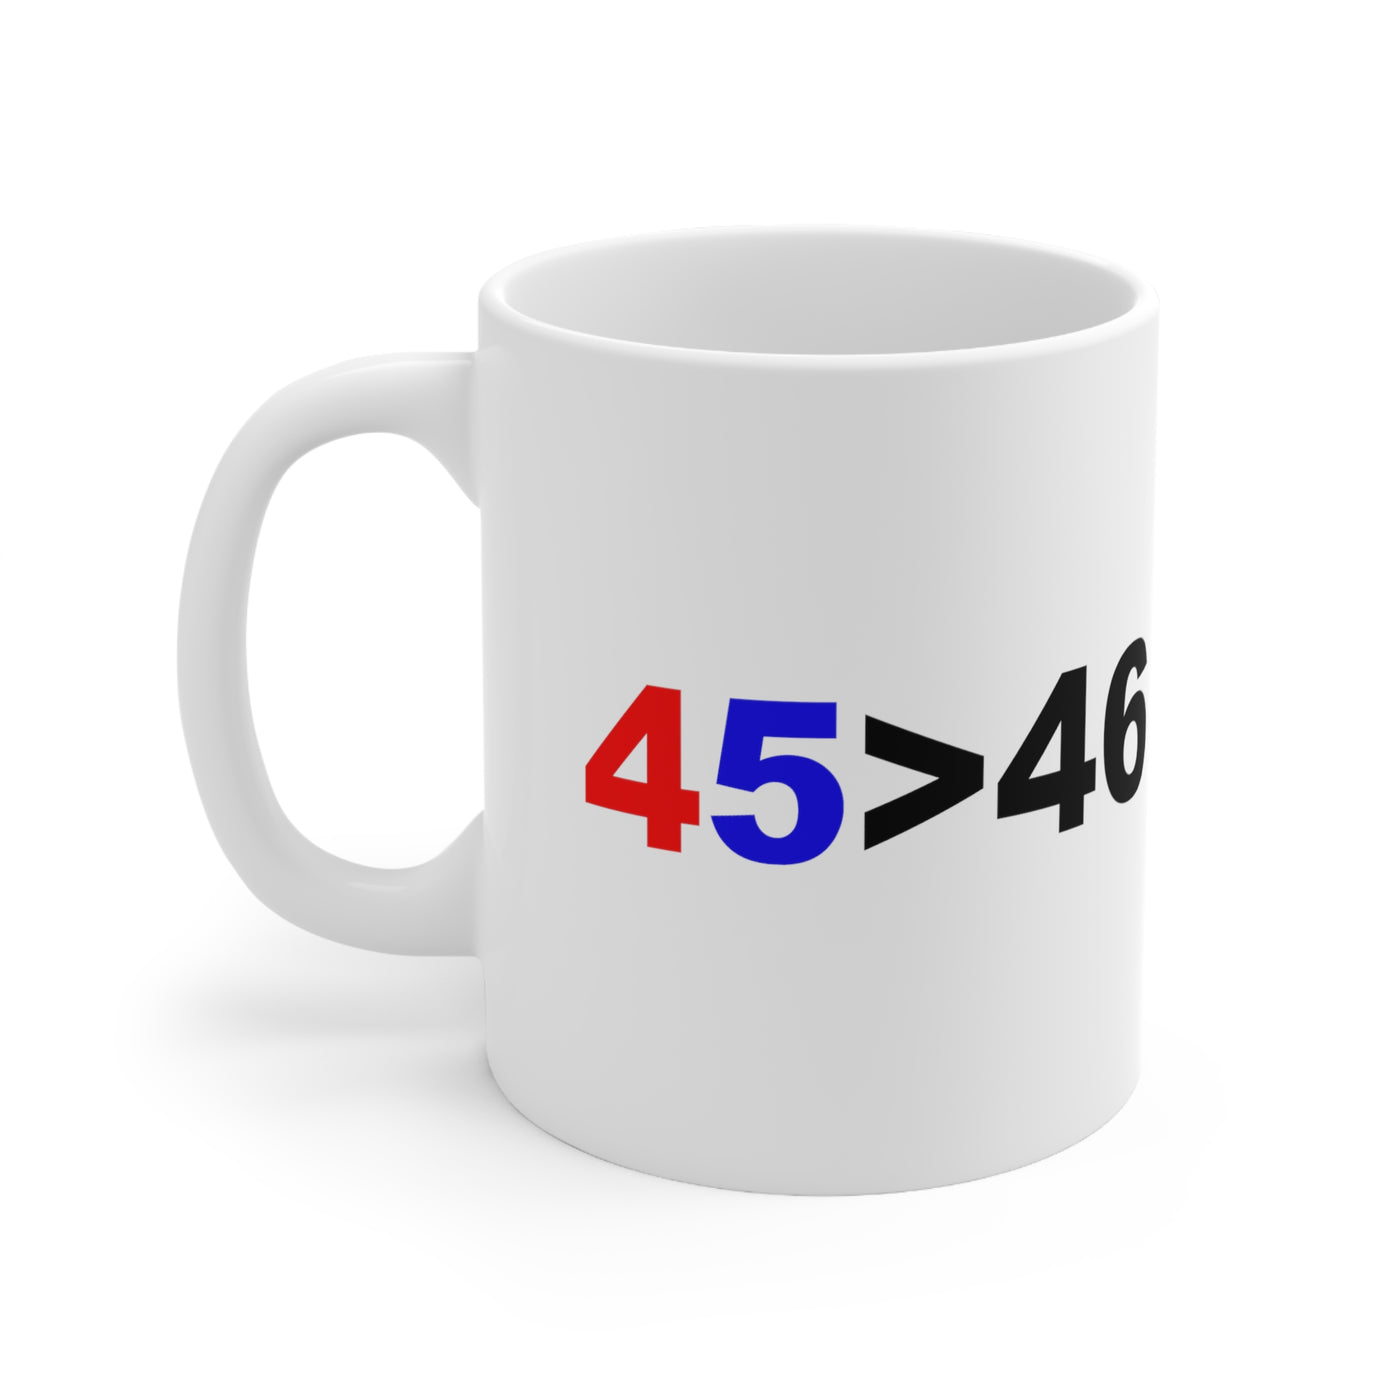 45>46 11oz Ceramic Mug